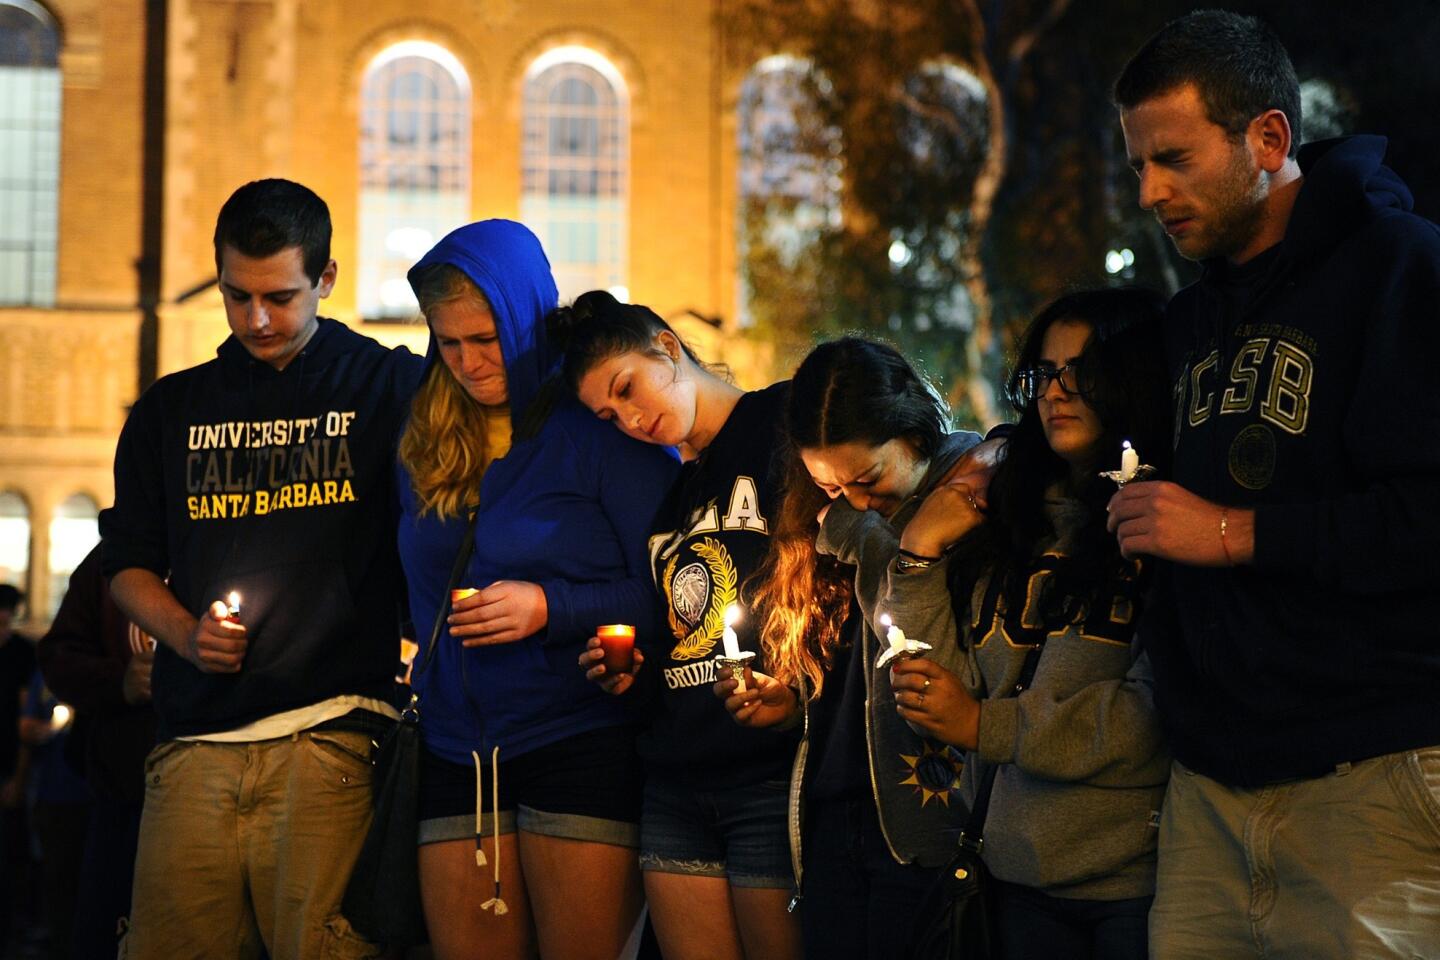 UCLA candlelight vigil